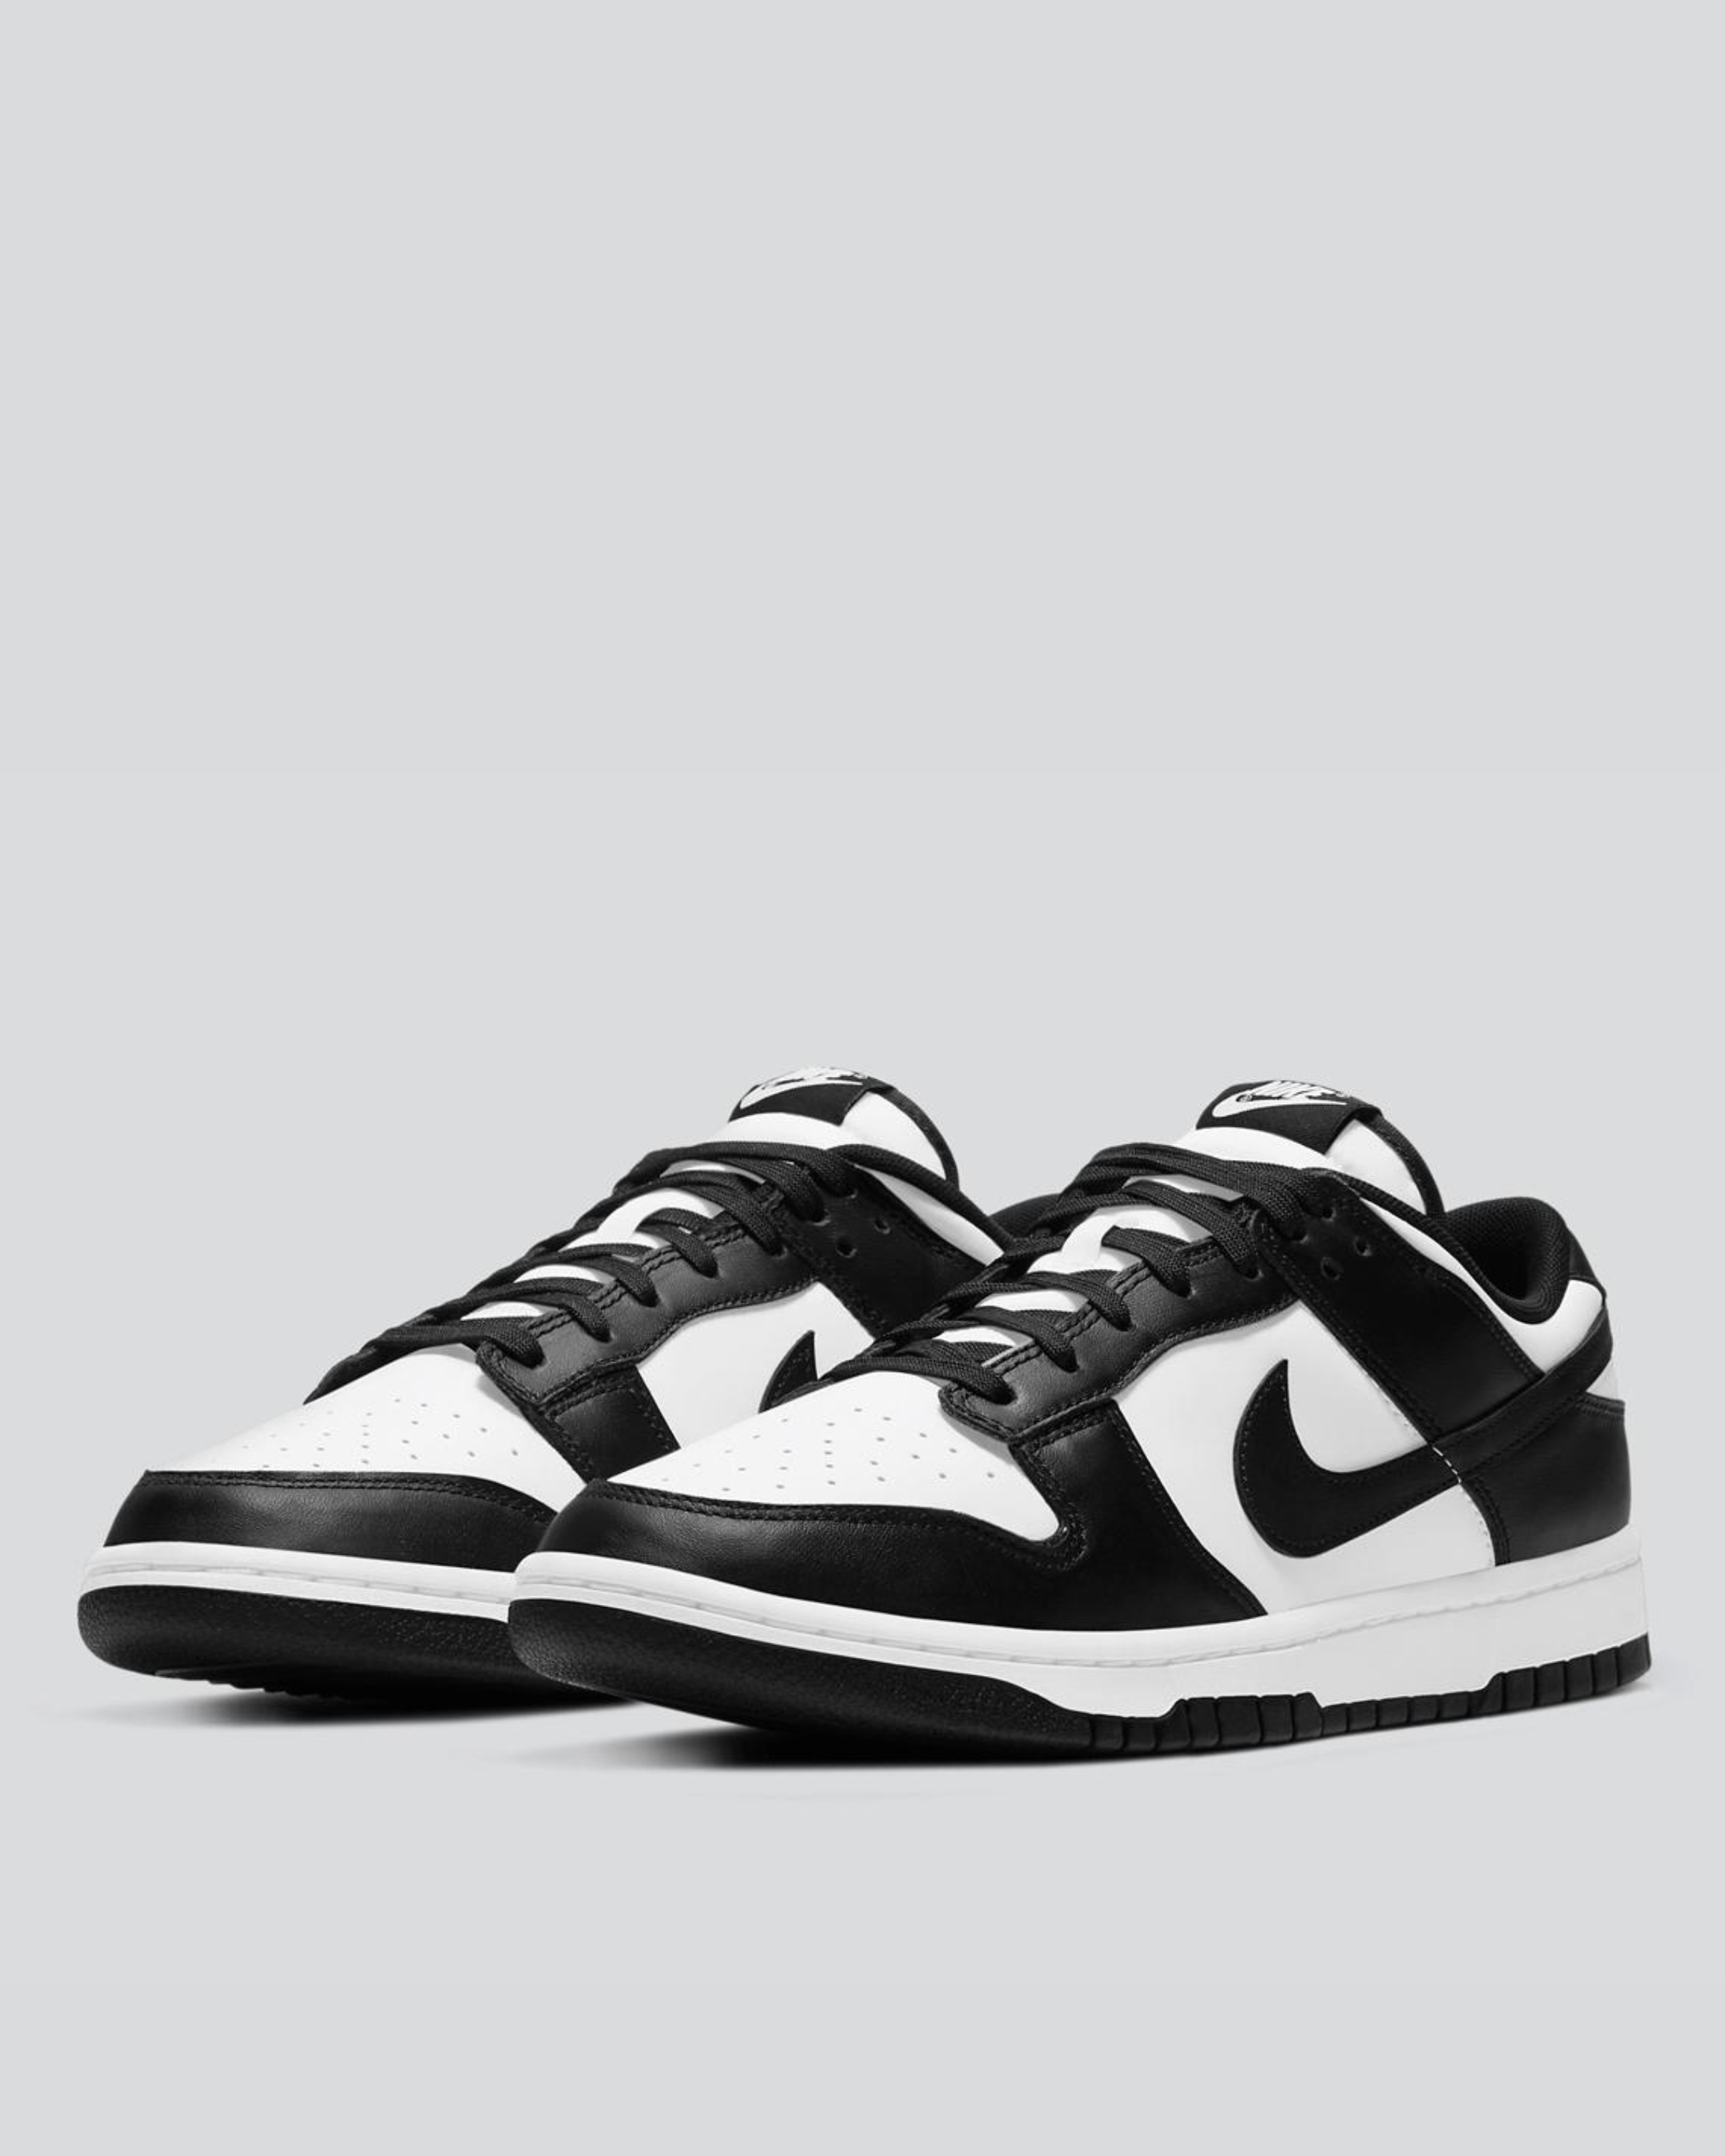 Nike Dunk Low In “White/Black”